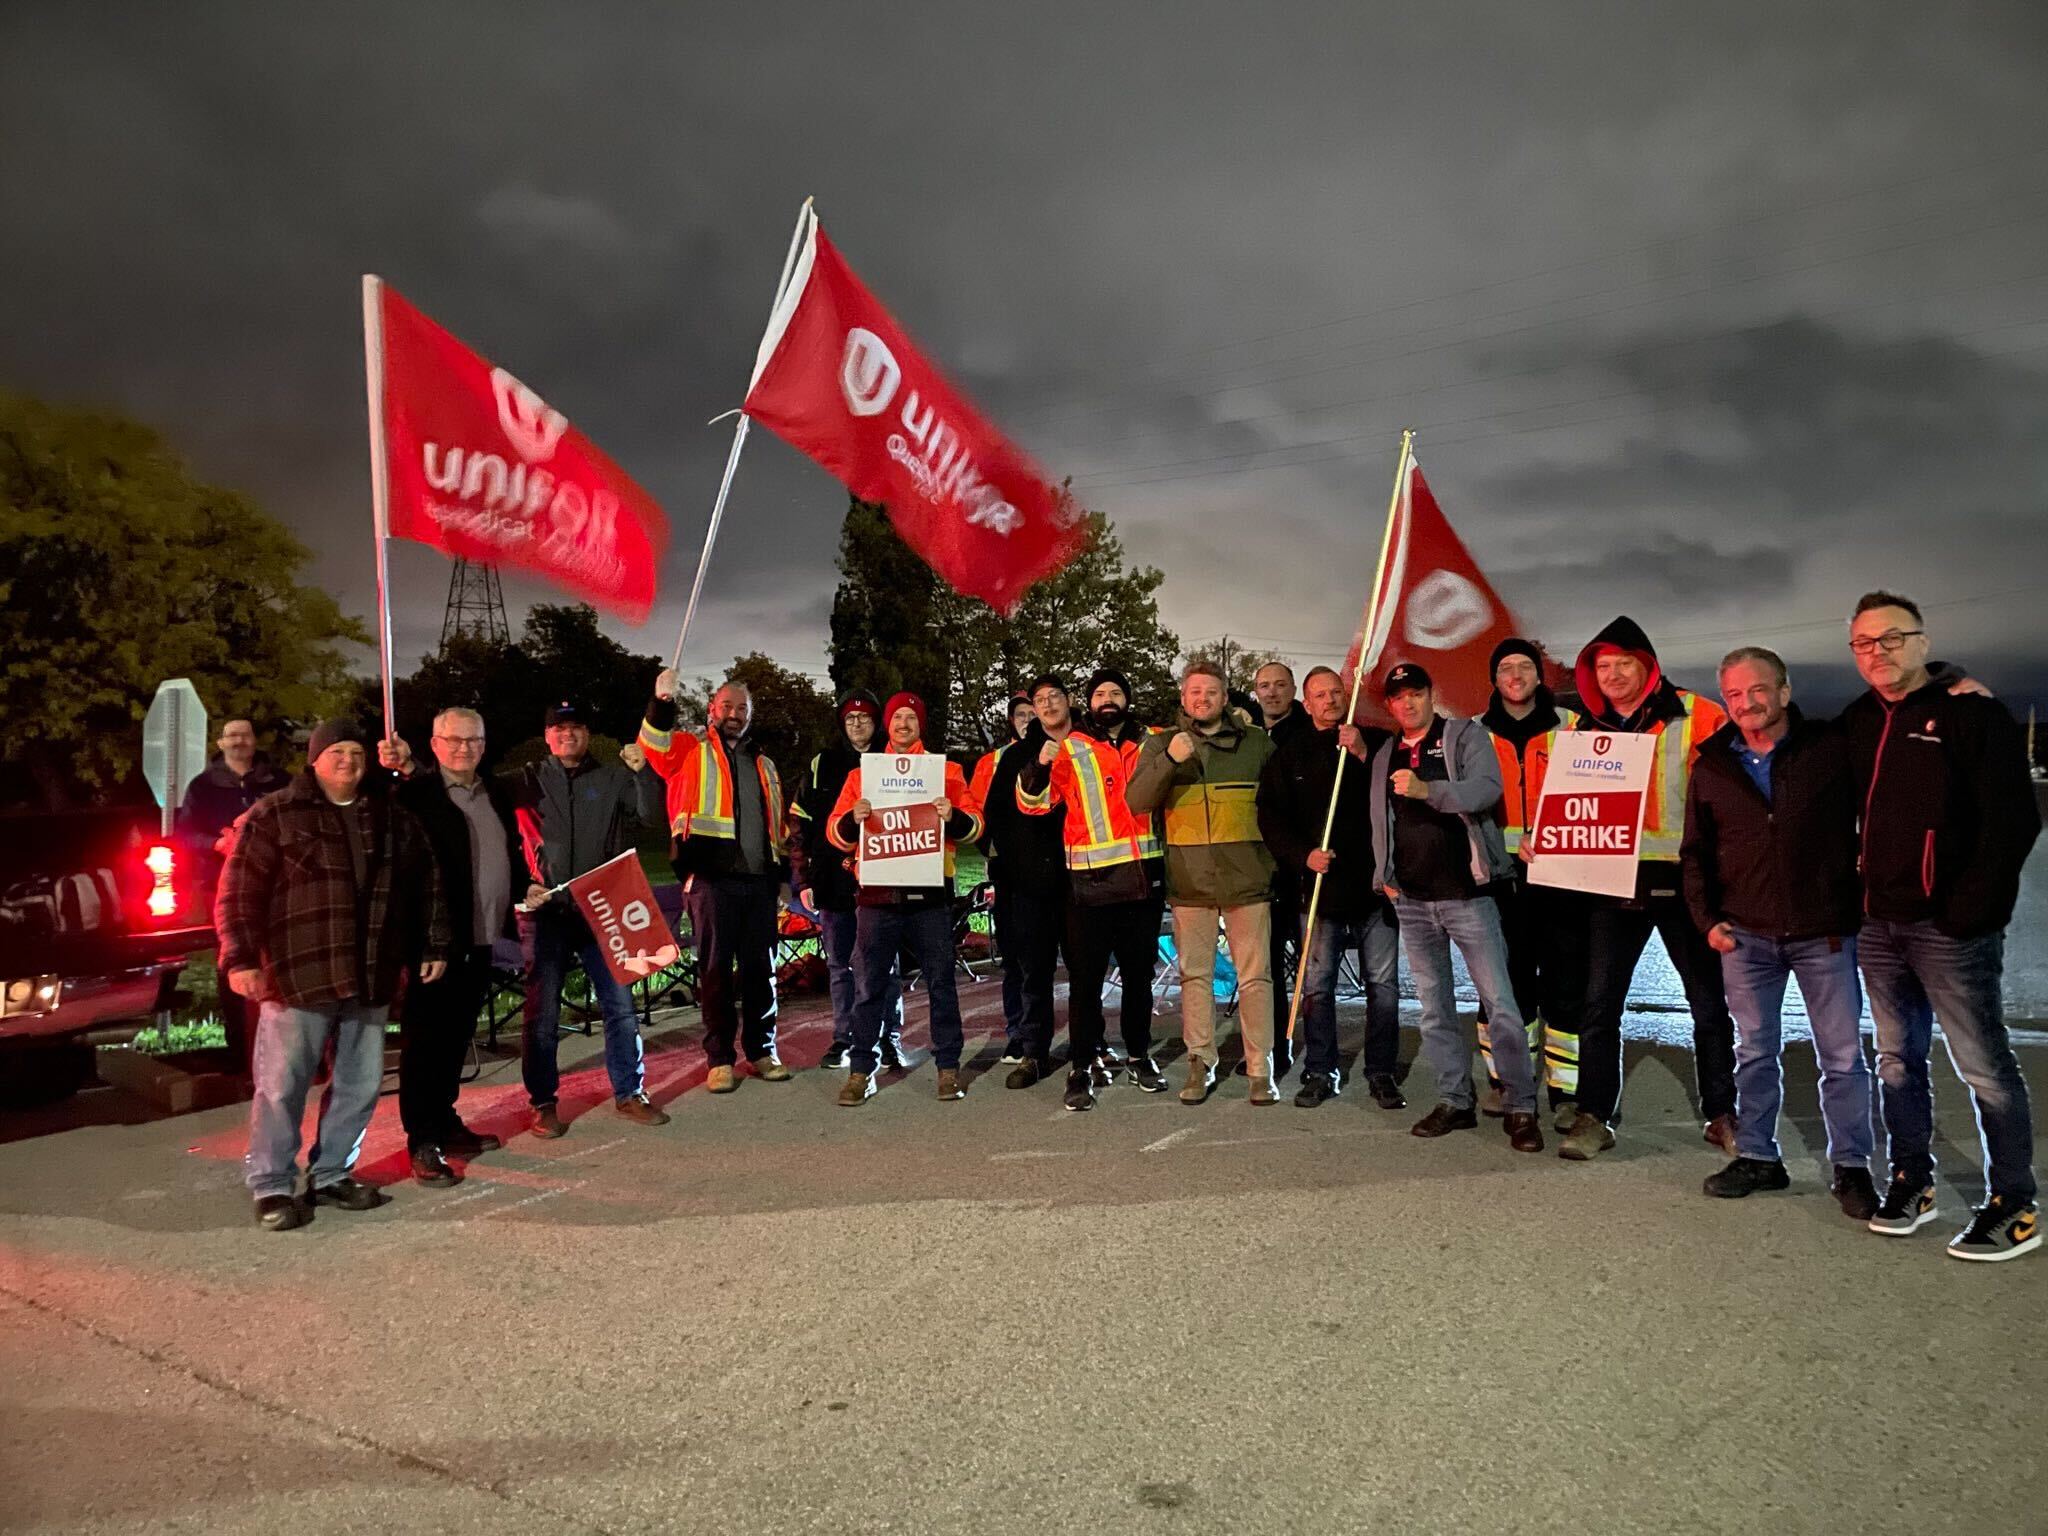 Unifor workers on strike